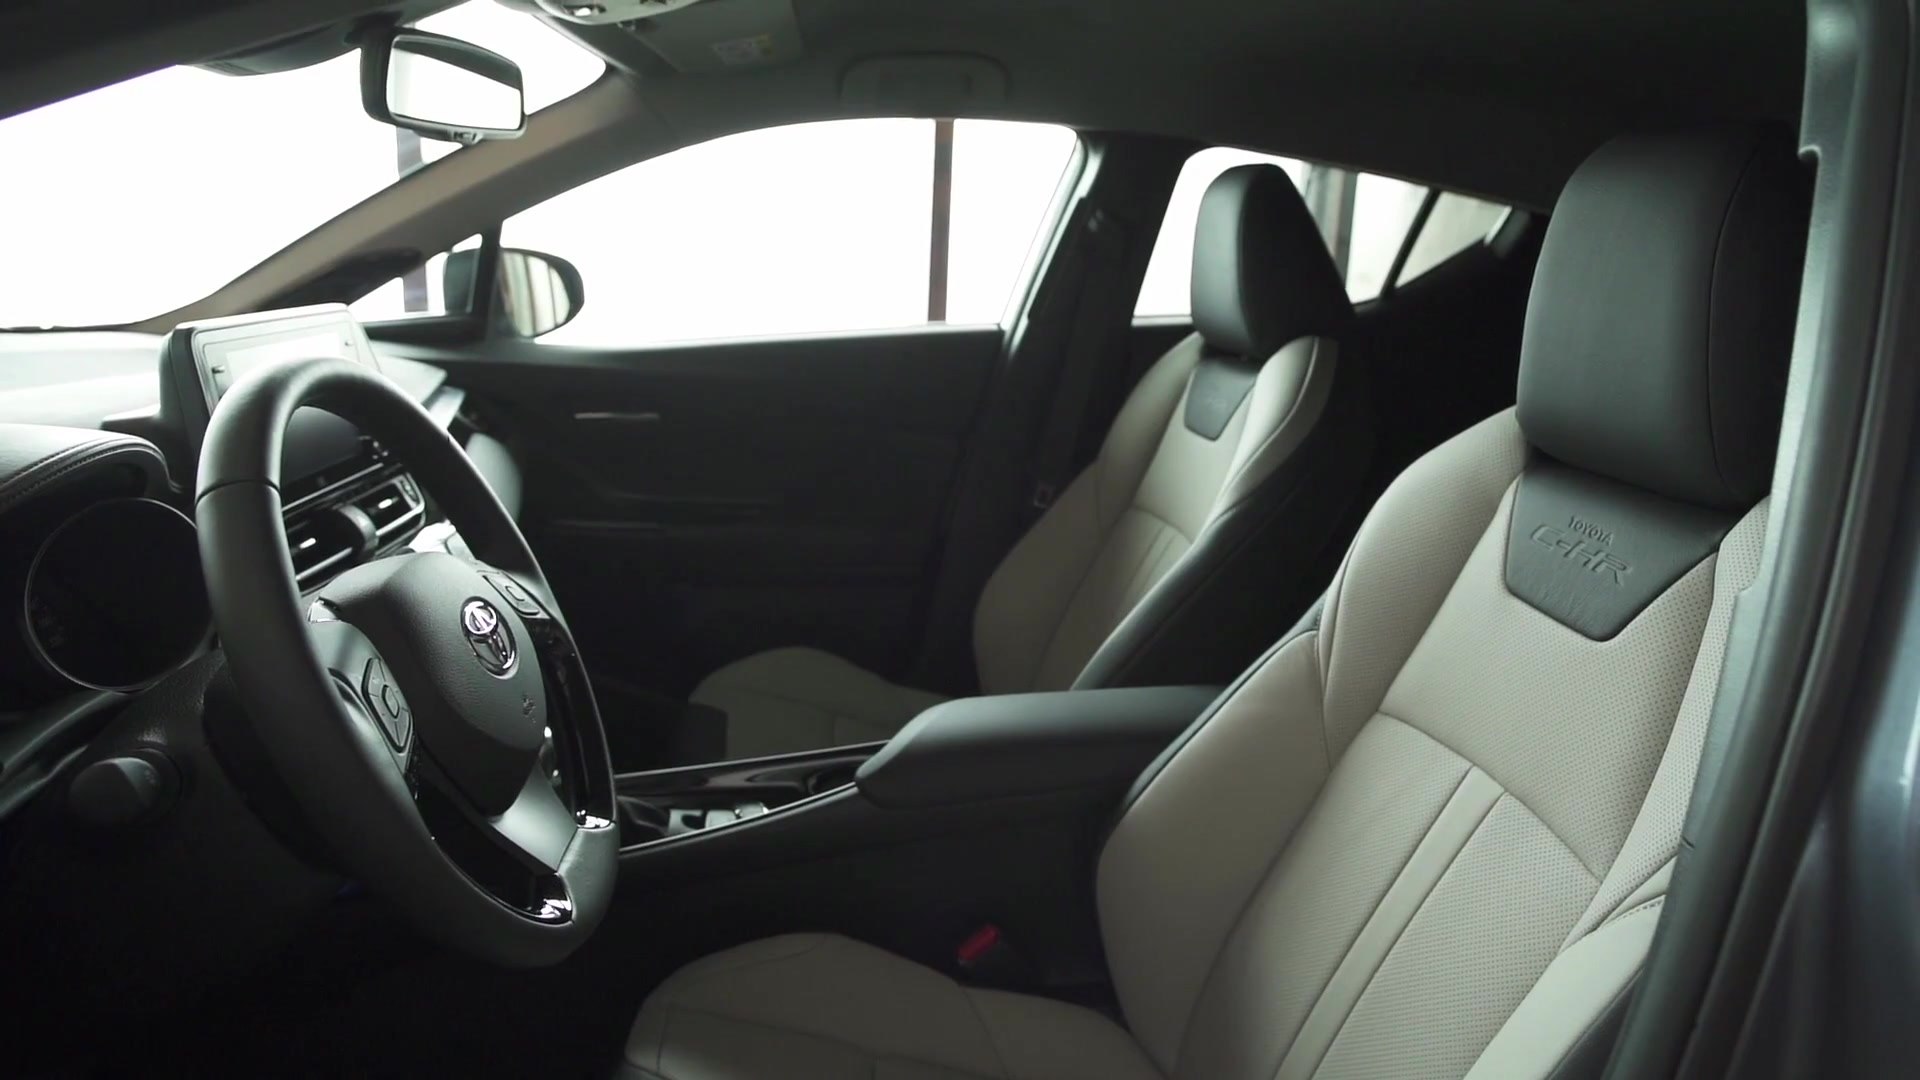 2020 Toyota C-HR Hybrid Interior Design in Celeste grey - video Dailymotion